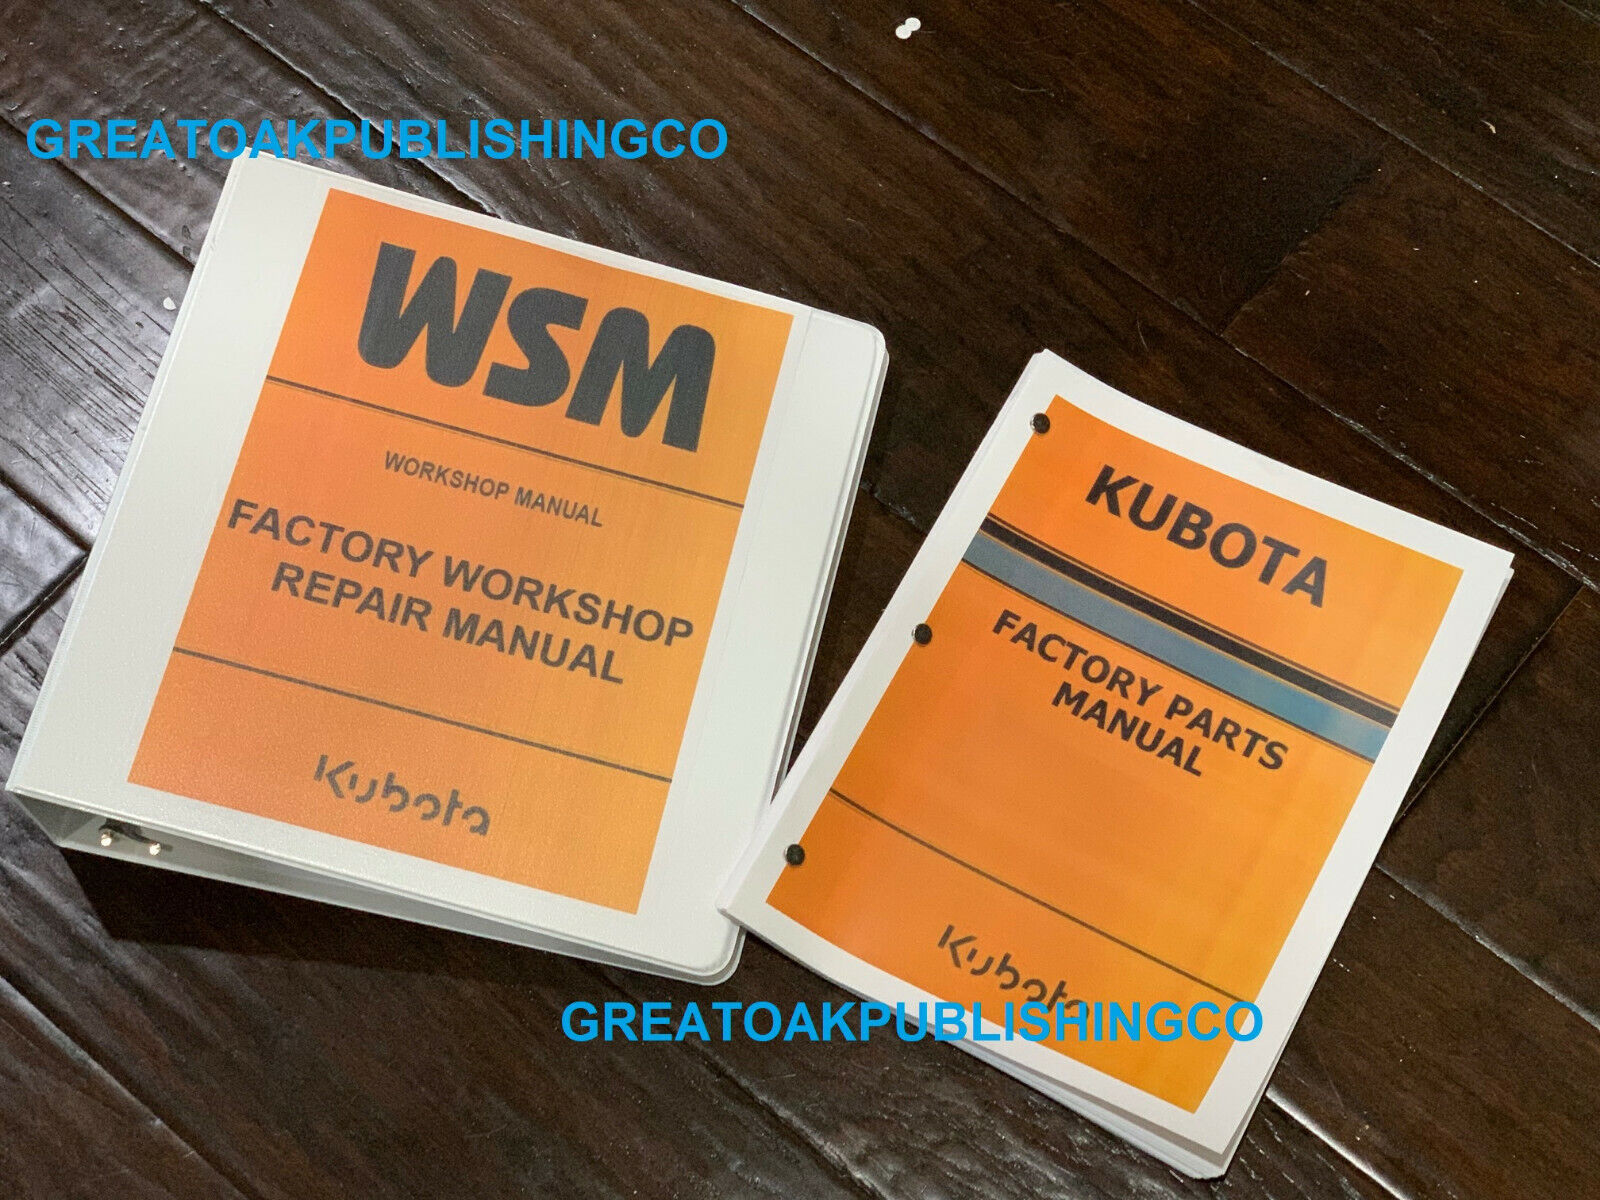 Kubota LA1153  Tractor Workshop Service Manual & parts binder printed